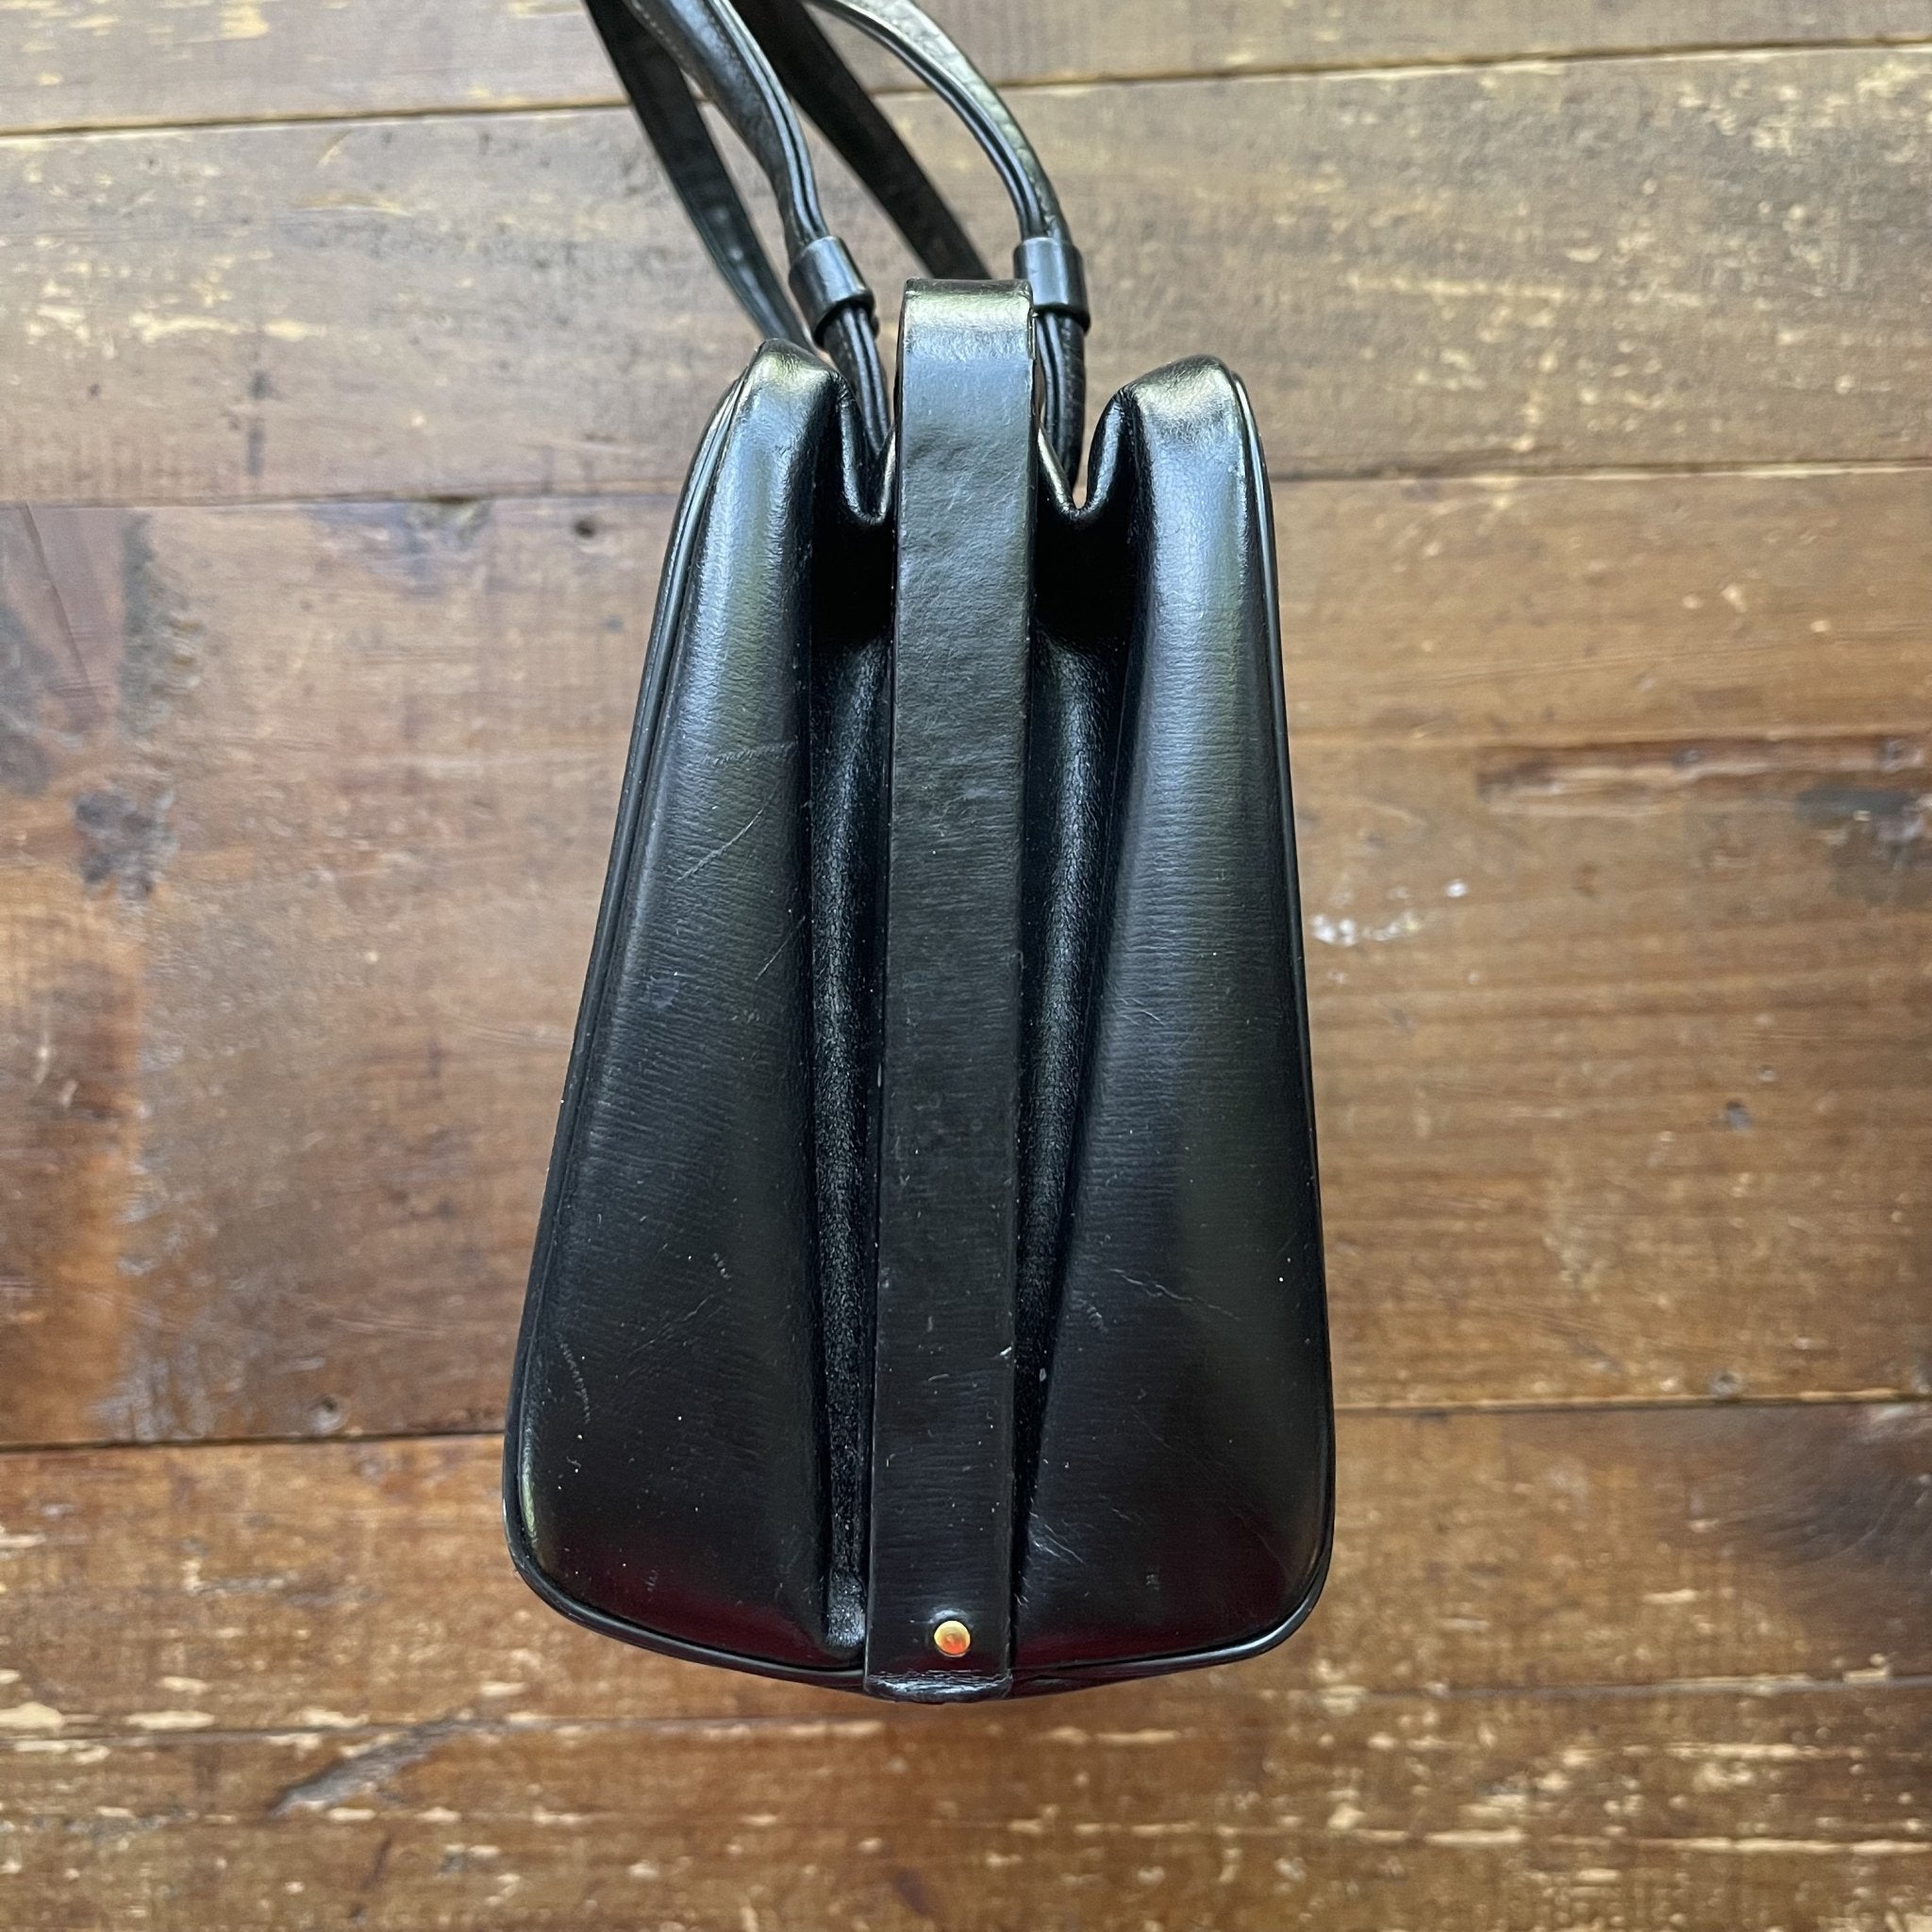 Vintage Black Leather Handbag by Koret in a Doctor Satchel Style Purse